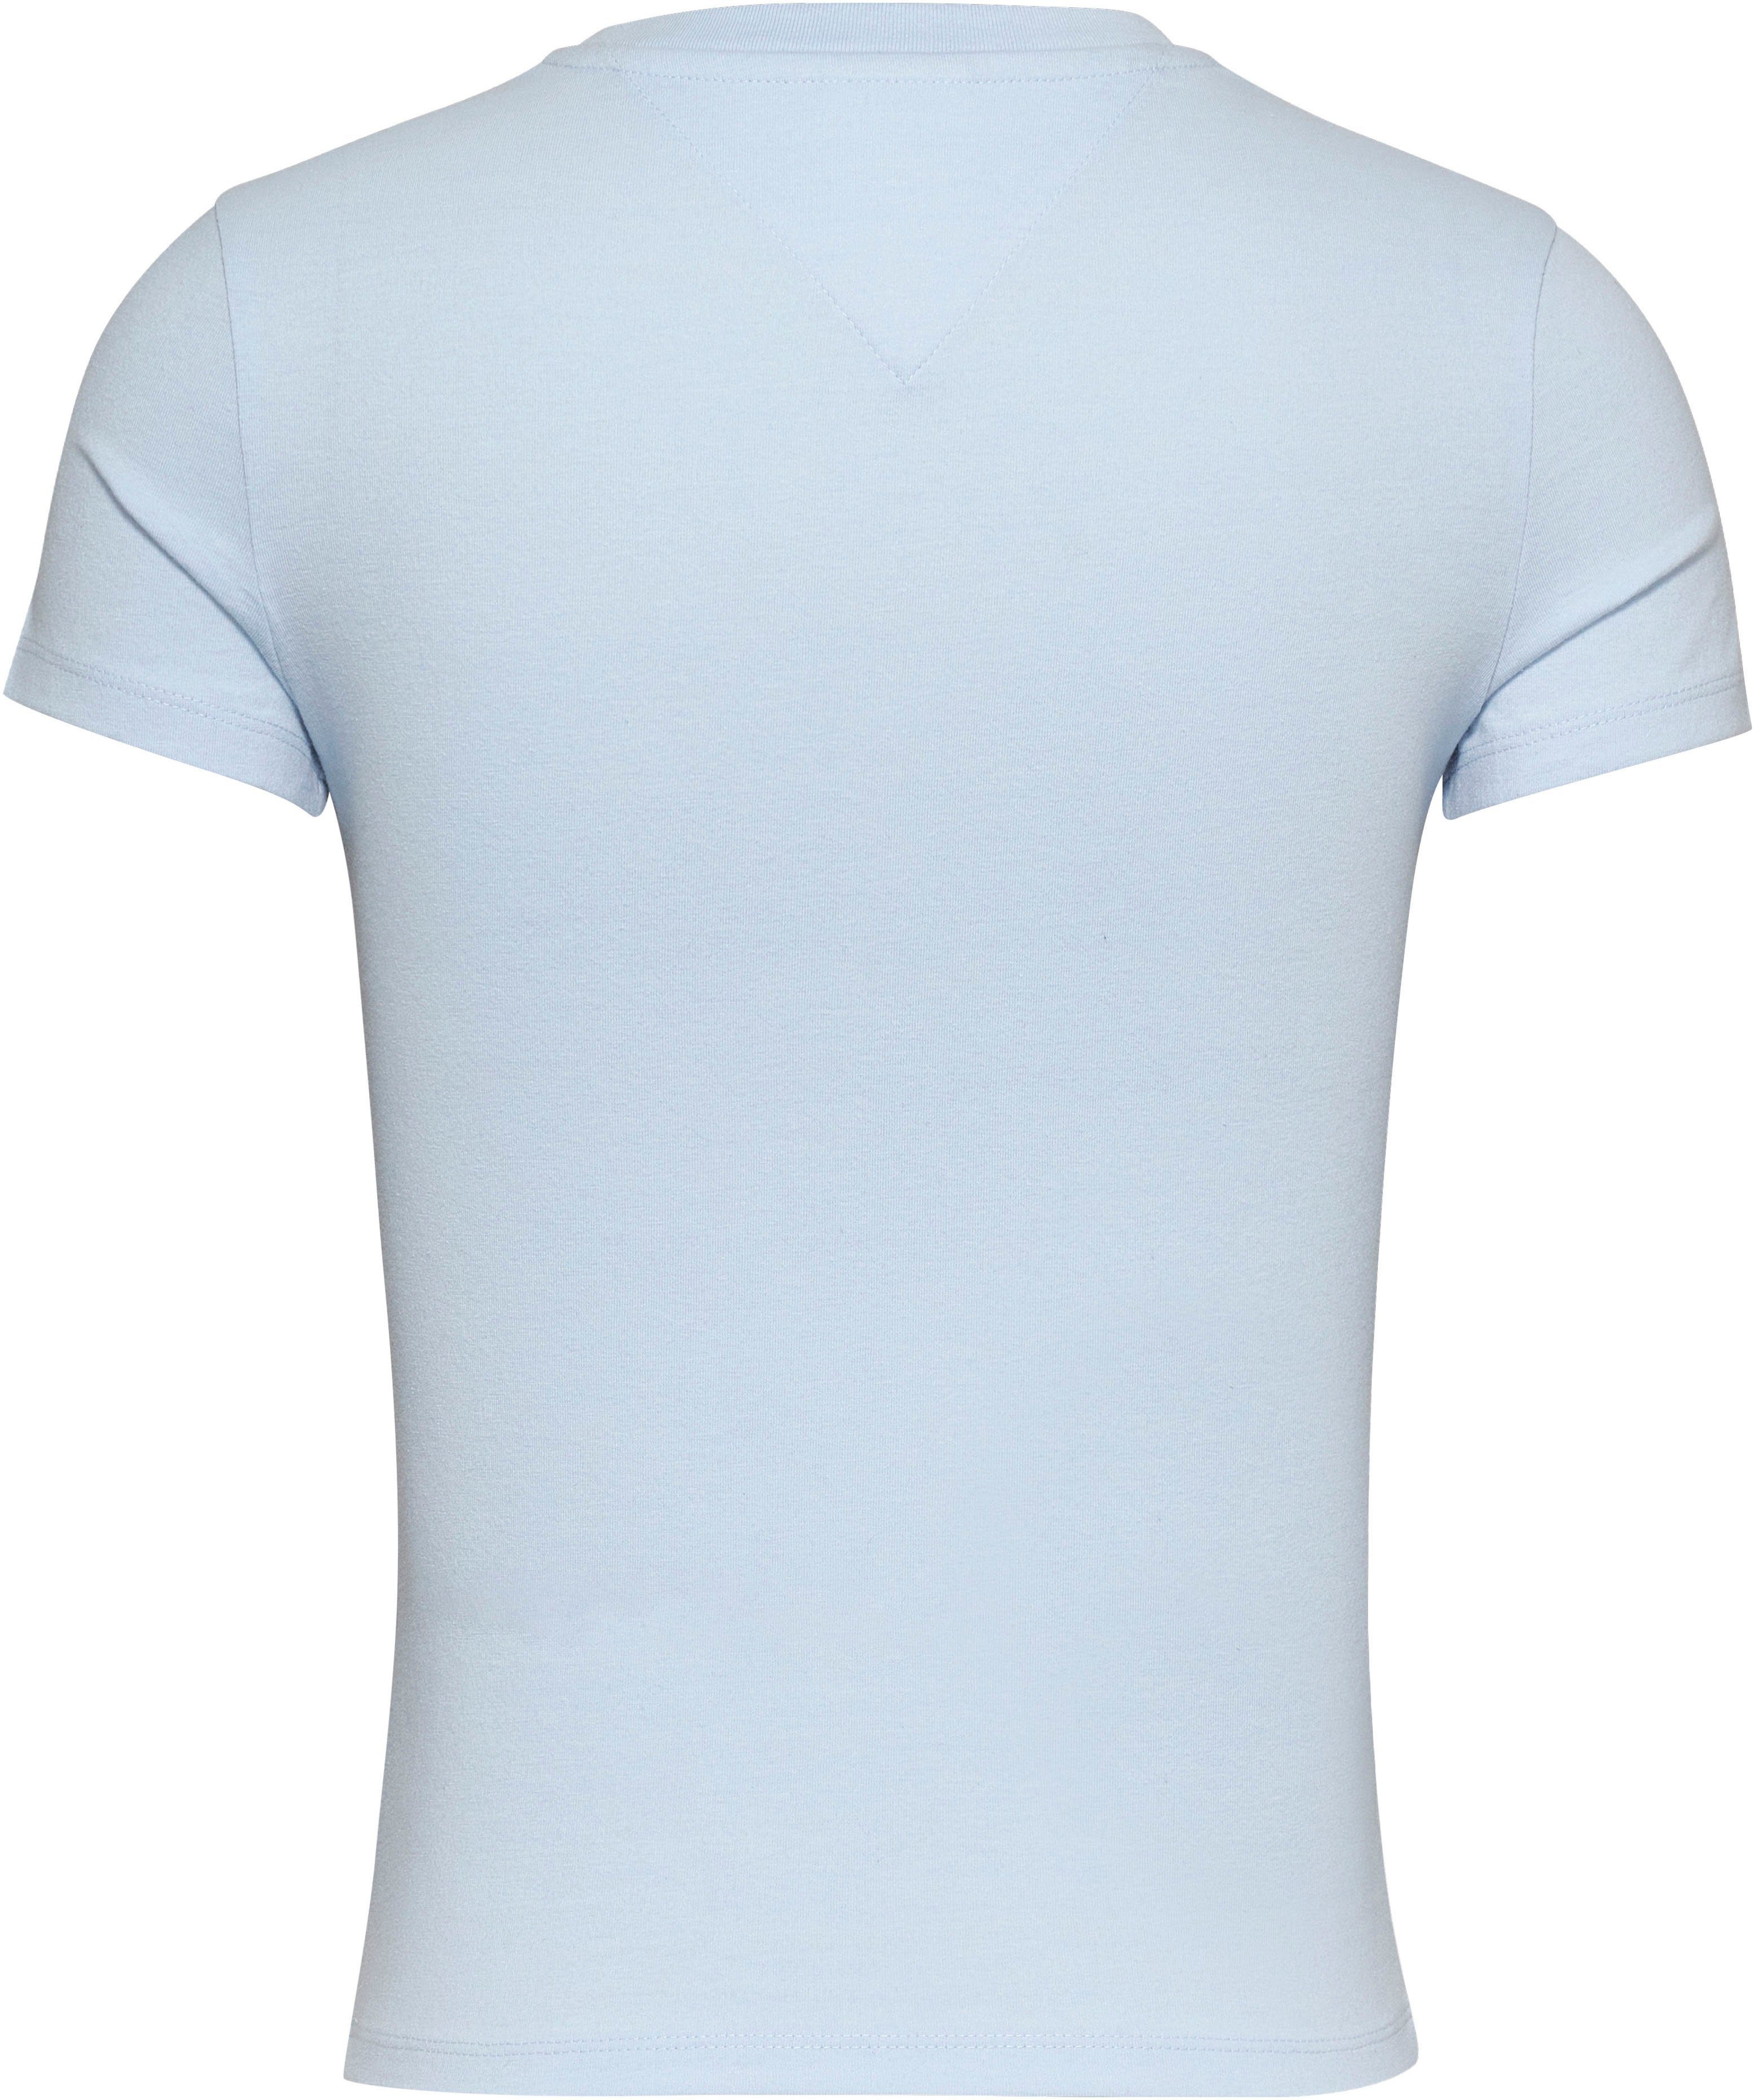 Jeans Slim Essential Tommy Breezy_Blue Logo mit T-Shirt Logoschriftzug